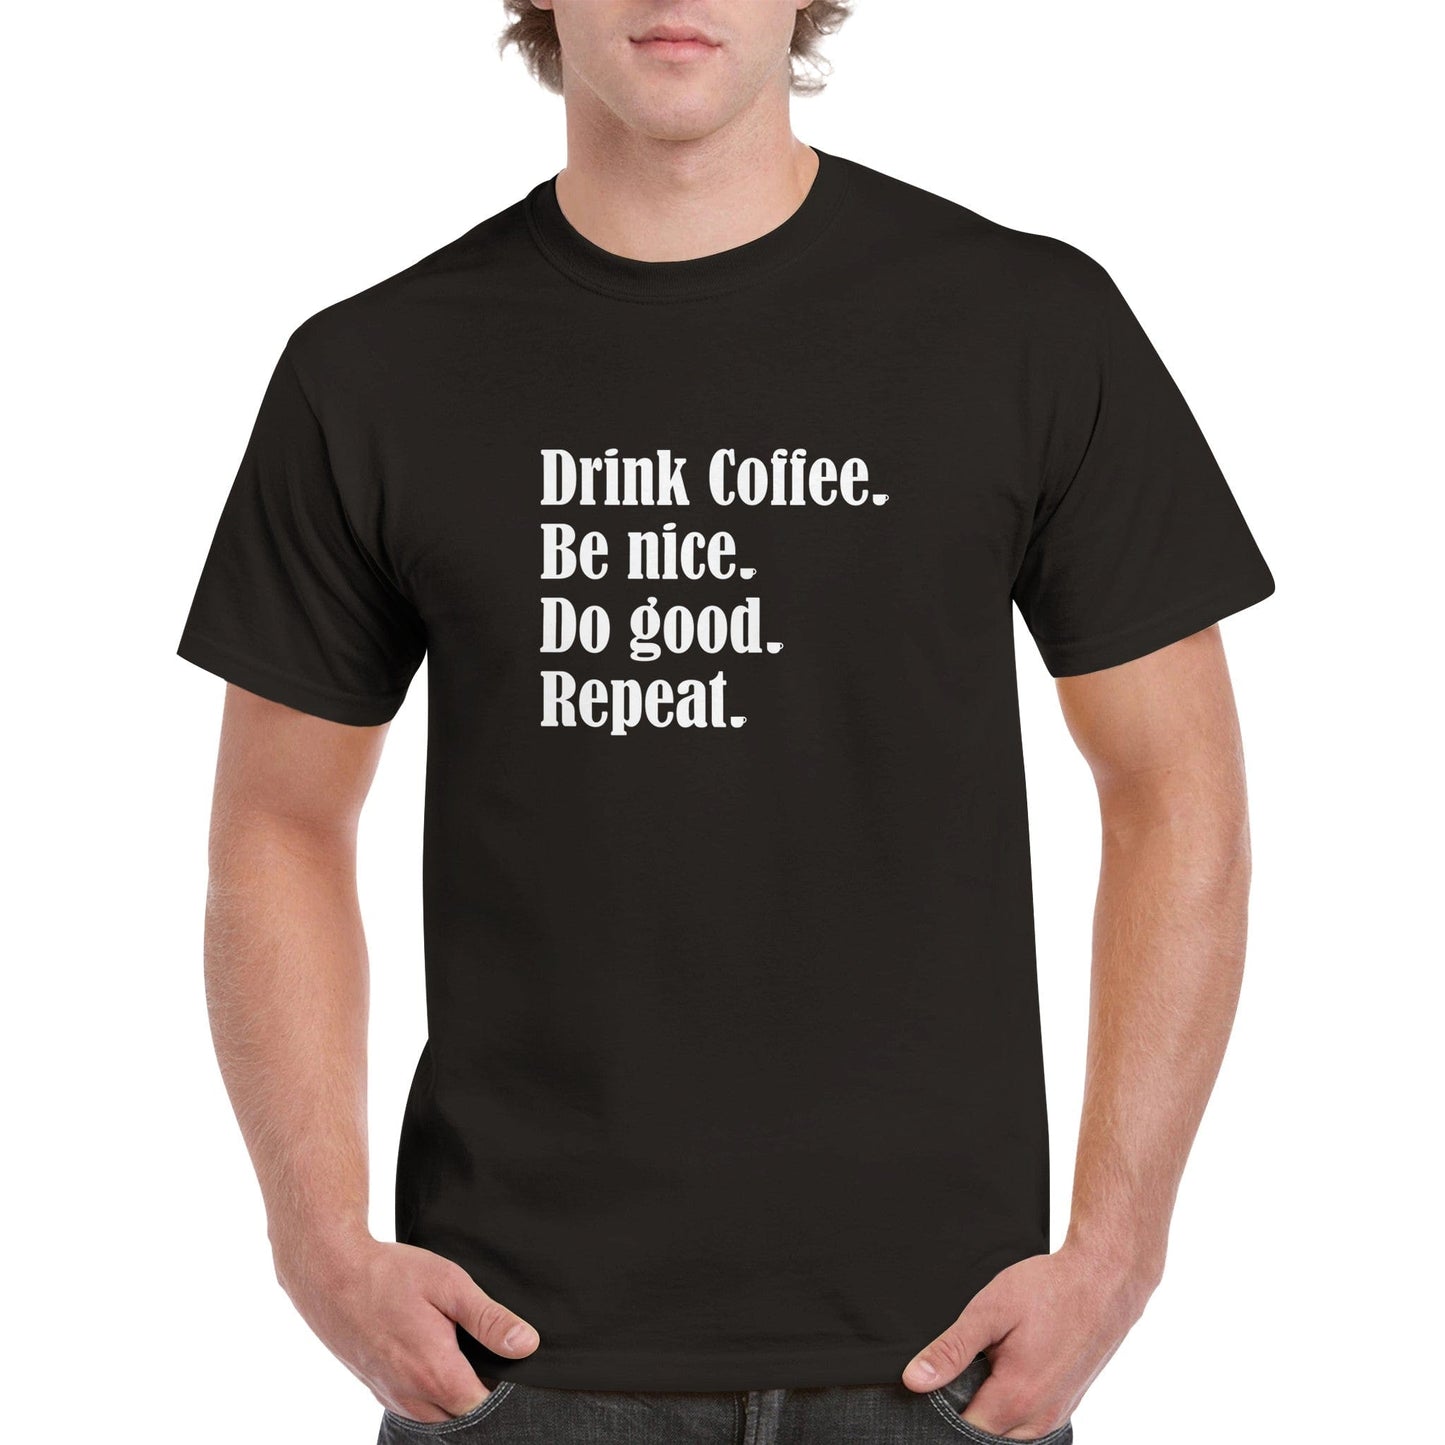 Good Bean Gifts Drink Coffee, Be Nice, Do Good, Repeat - Crewneck T-shirt Black / S